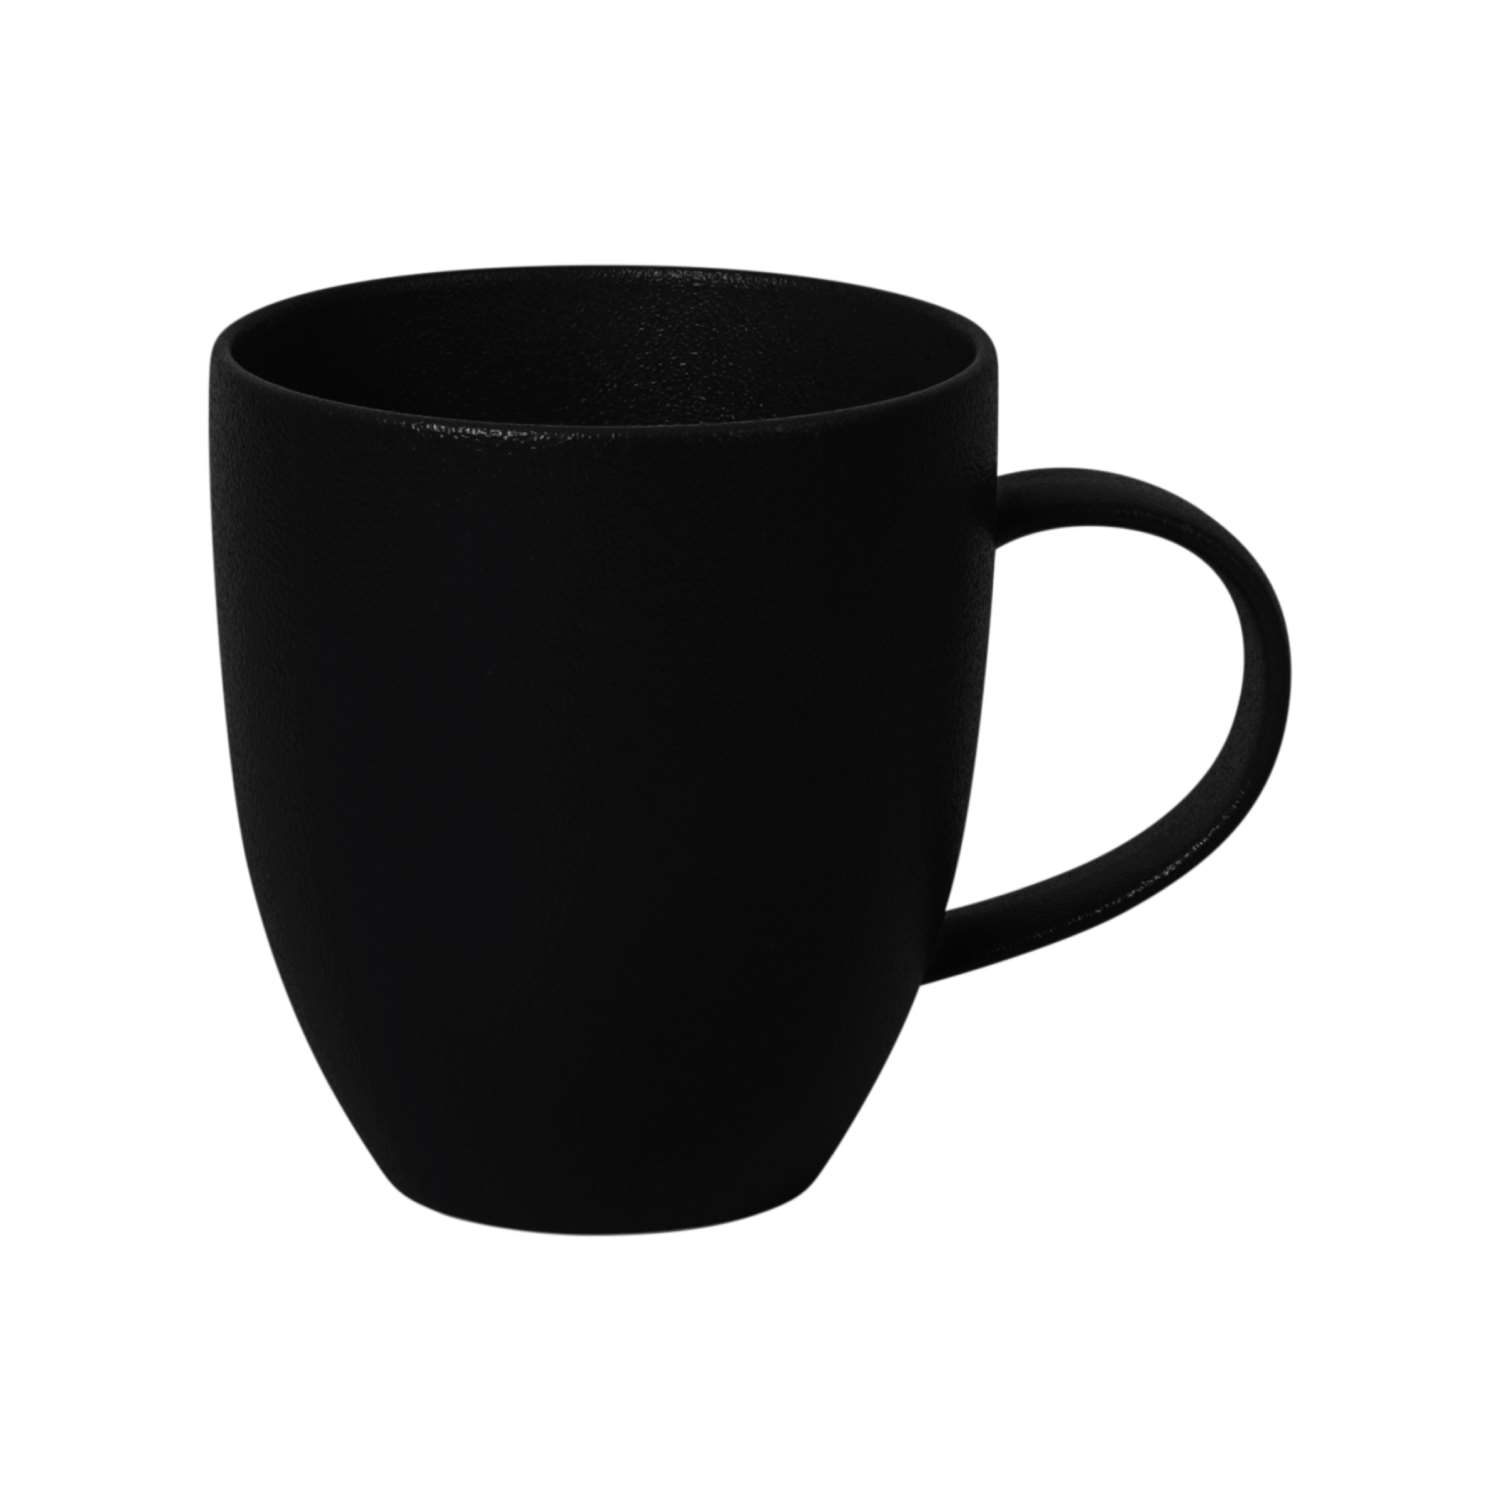 Baralee Black Sand Coupe Mug 300 Cc (10 1/4 Oz)